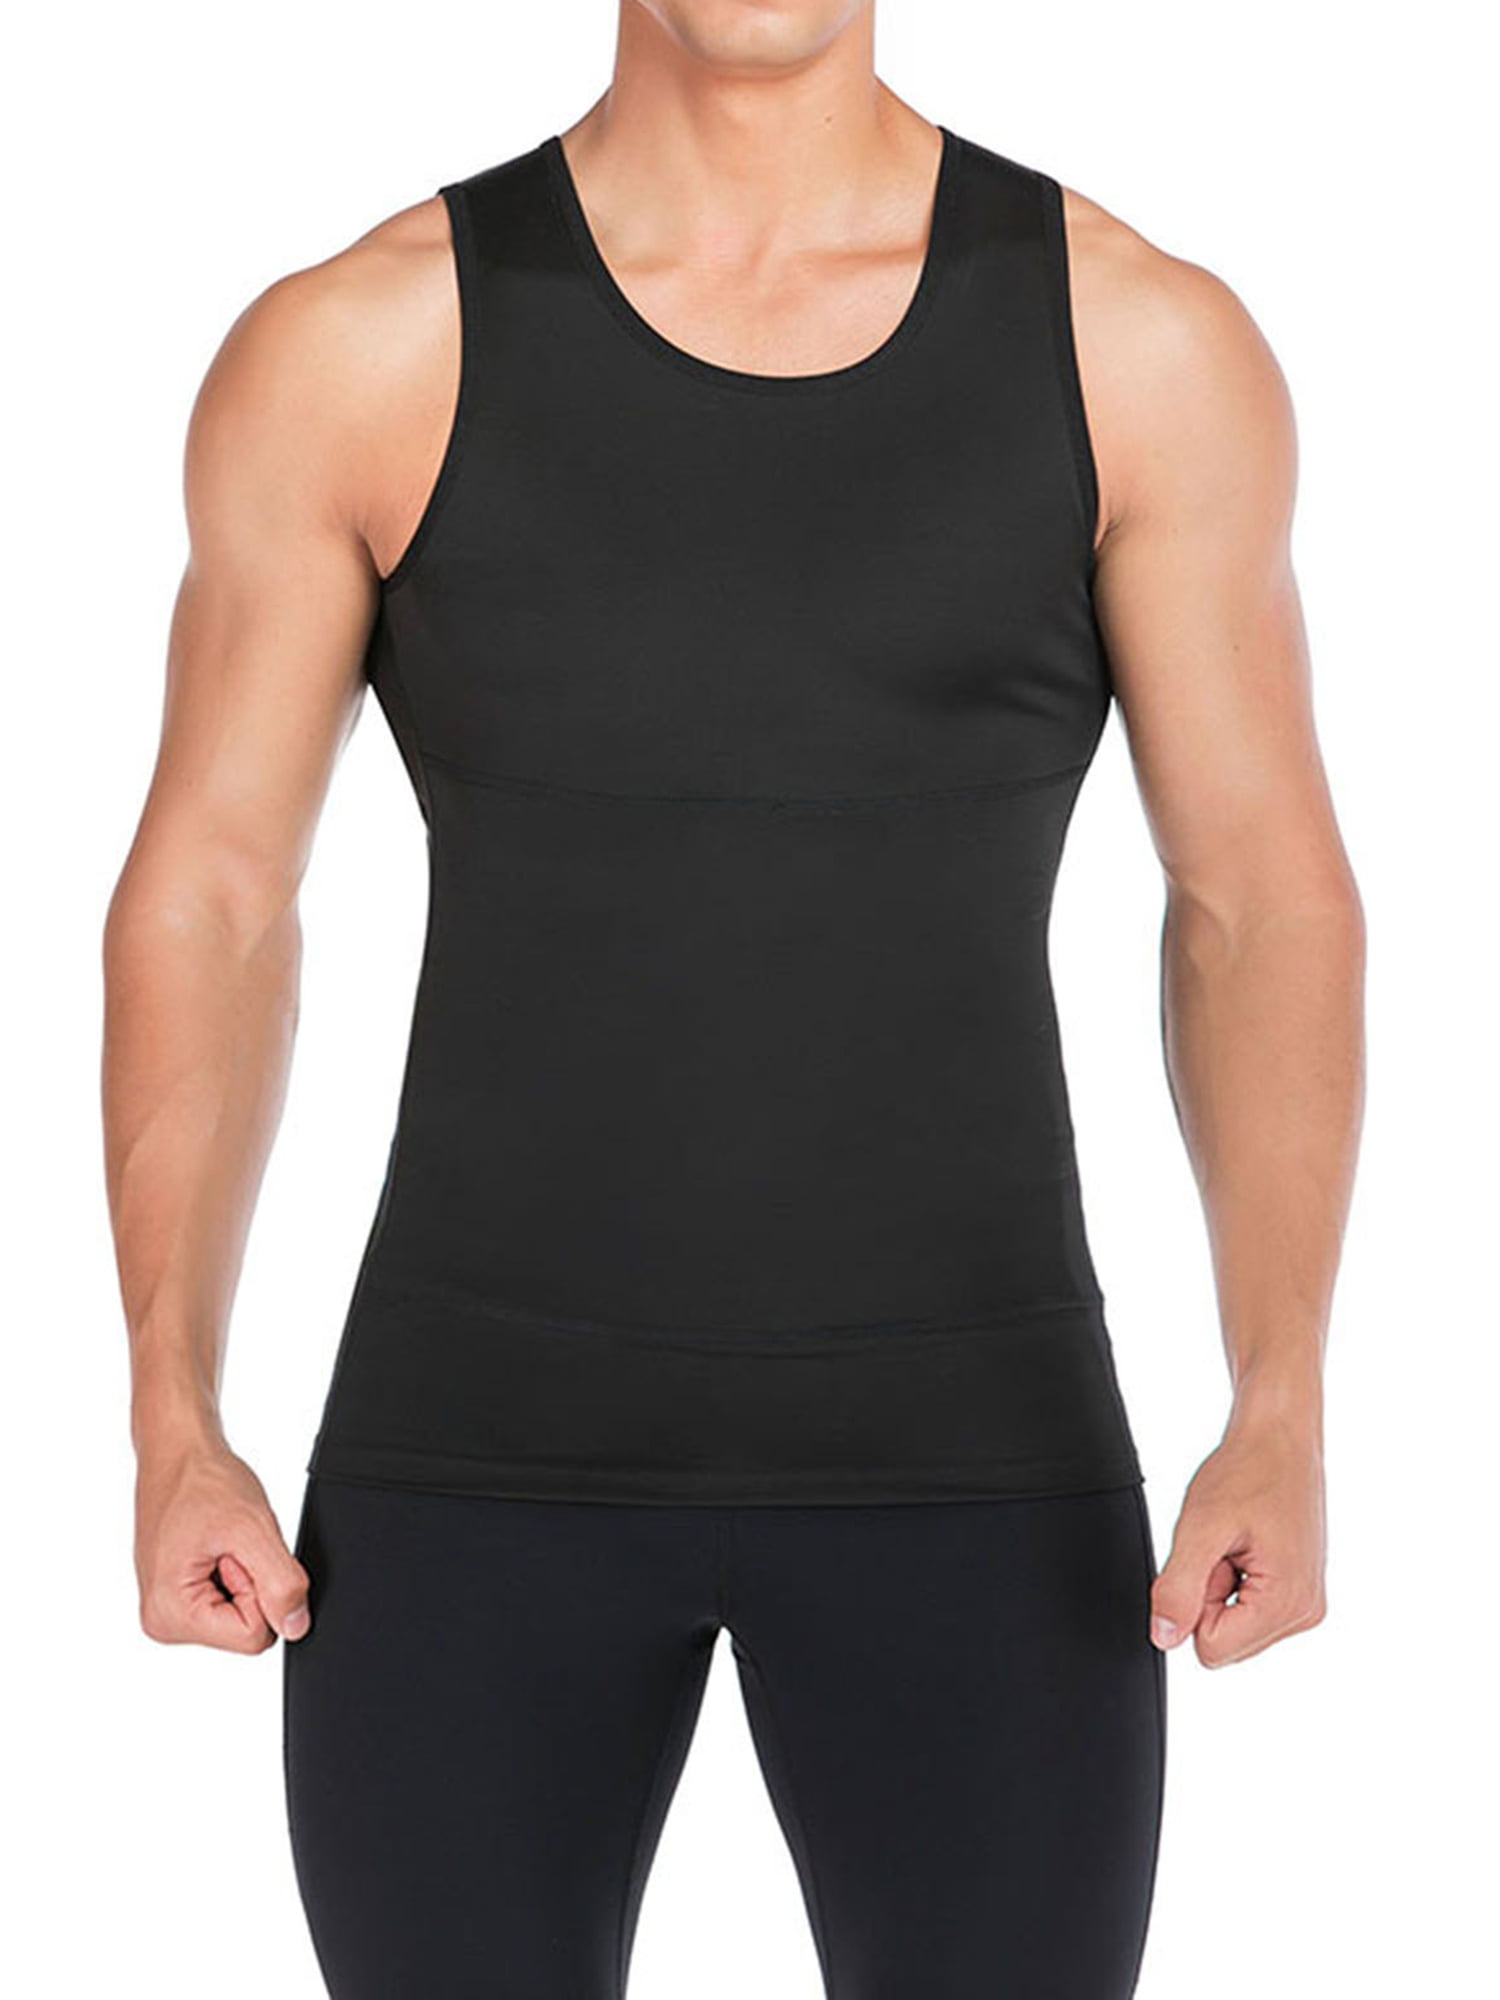 Mens Compression Shirt Slimming Body Shaper Underwear Workout Tank Tops Abs Abdomen Undershirts 